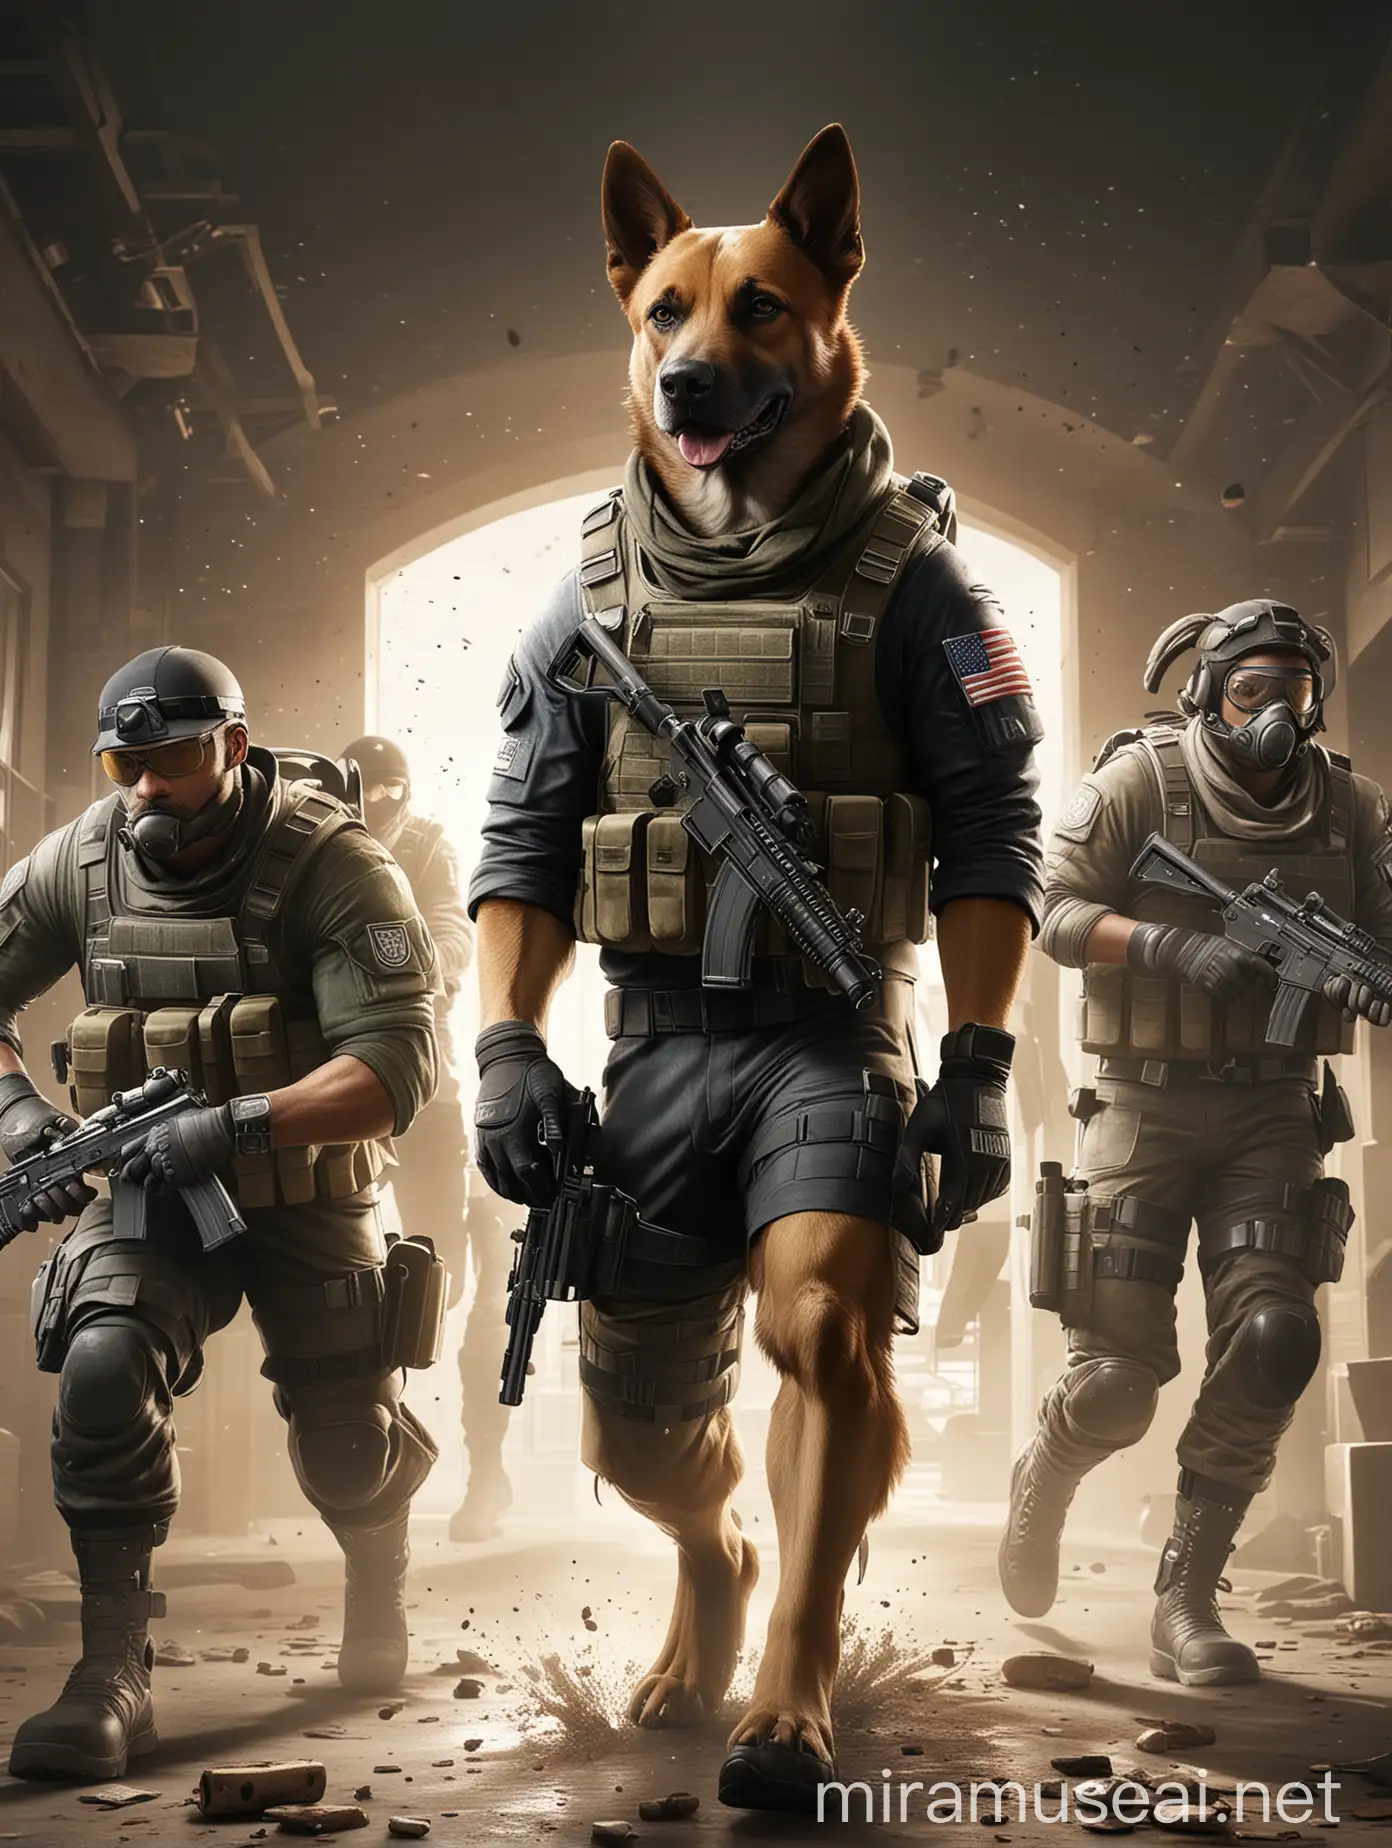 Canine Companion Joins Rainbow Six Siege Squad